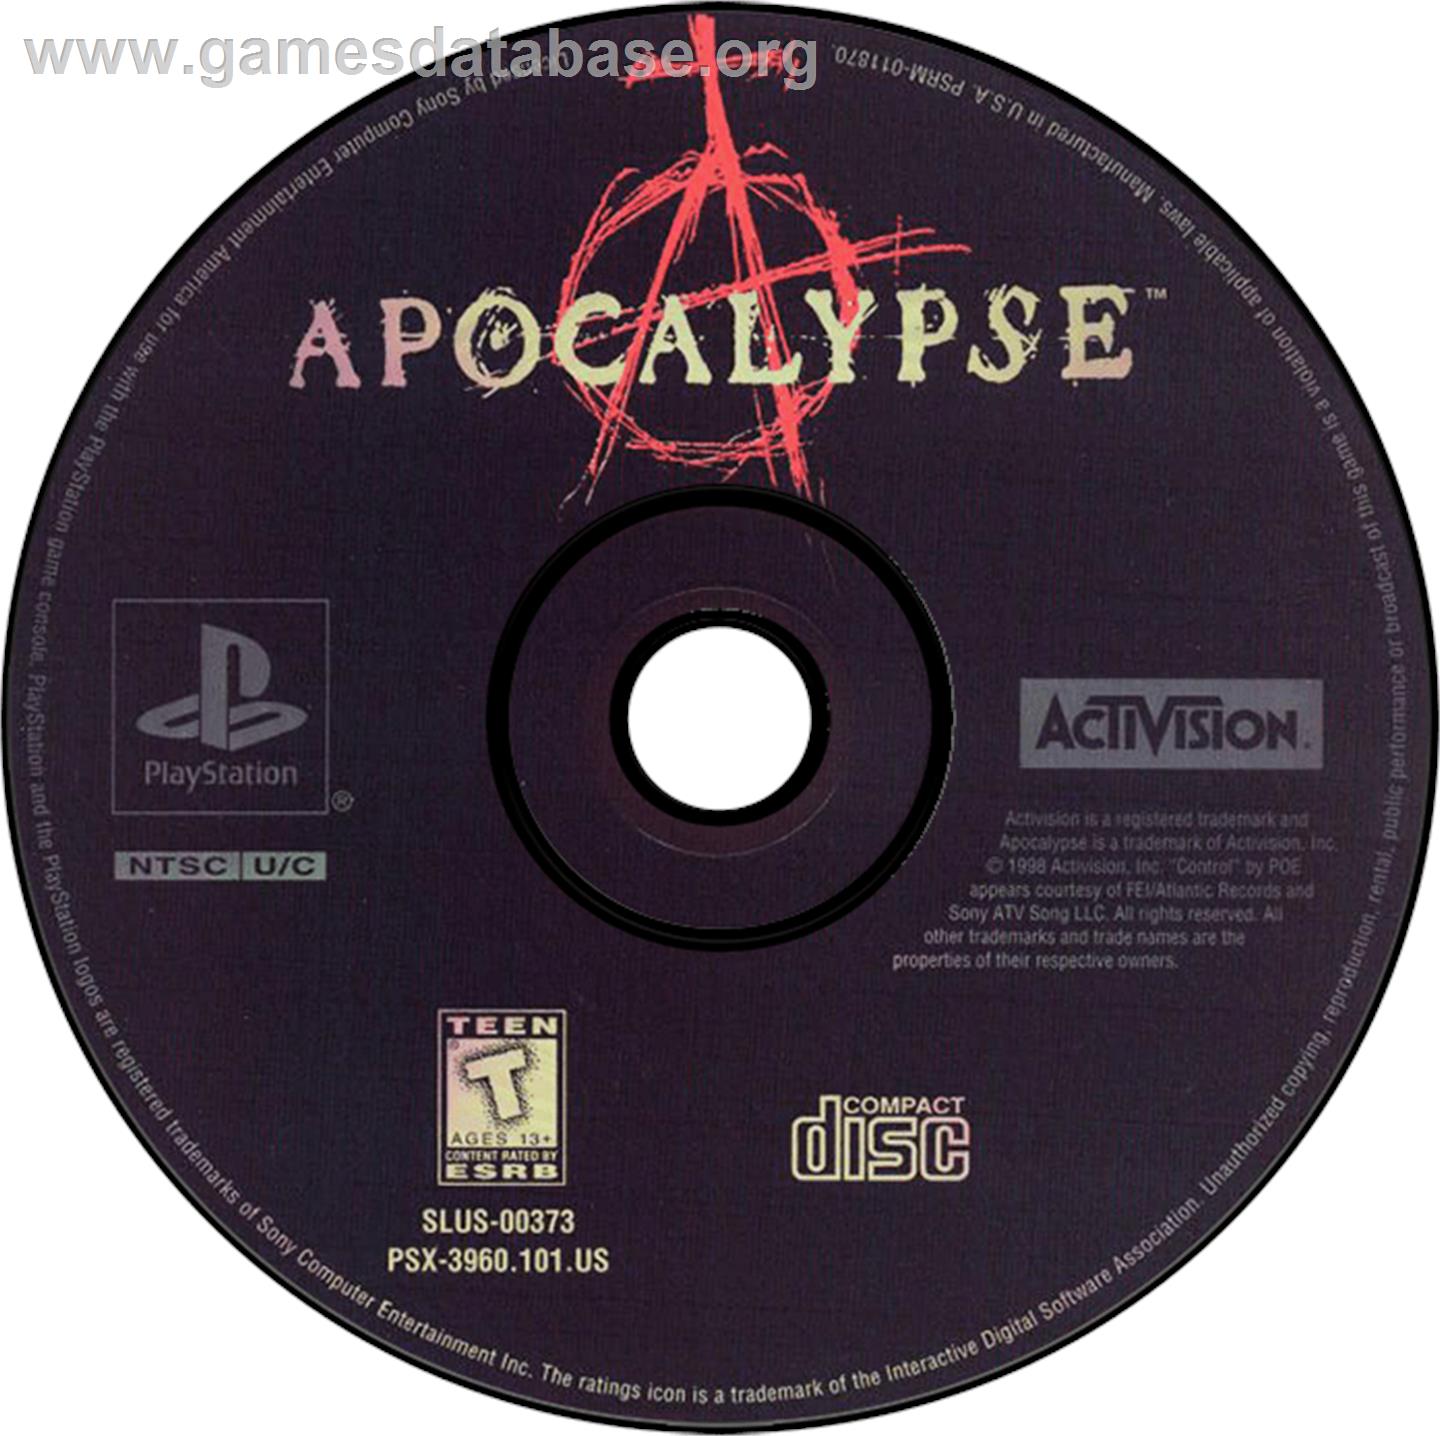 Apocalypse - Sony Playstation - Artwork - Disc